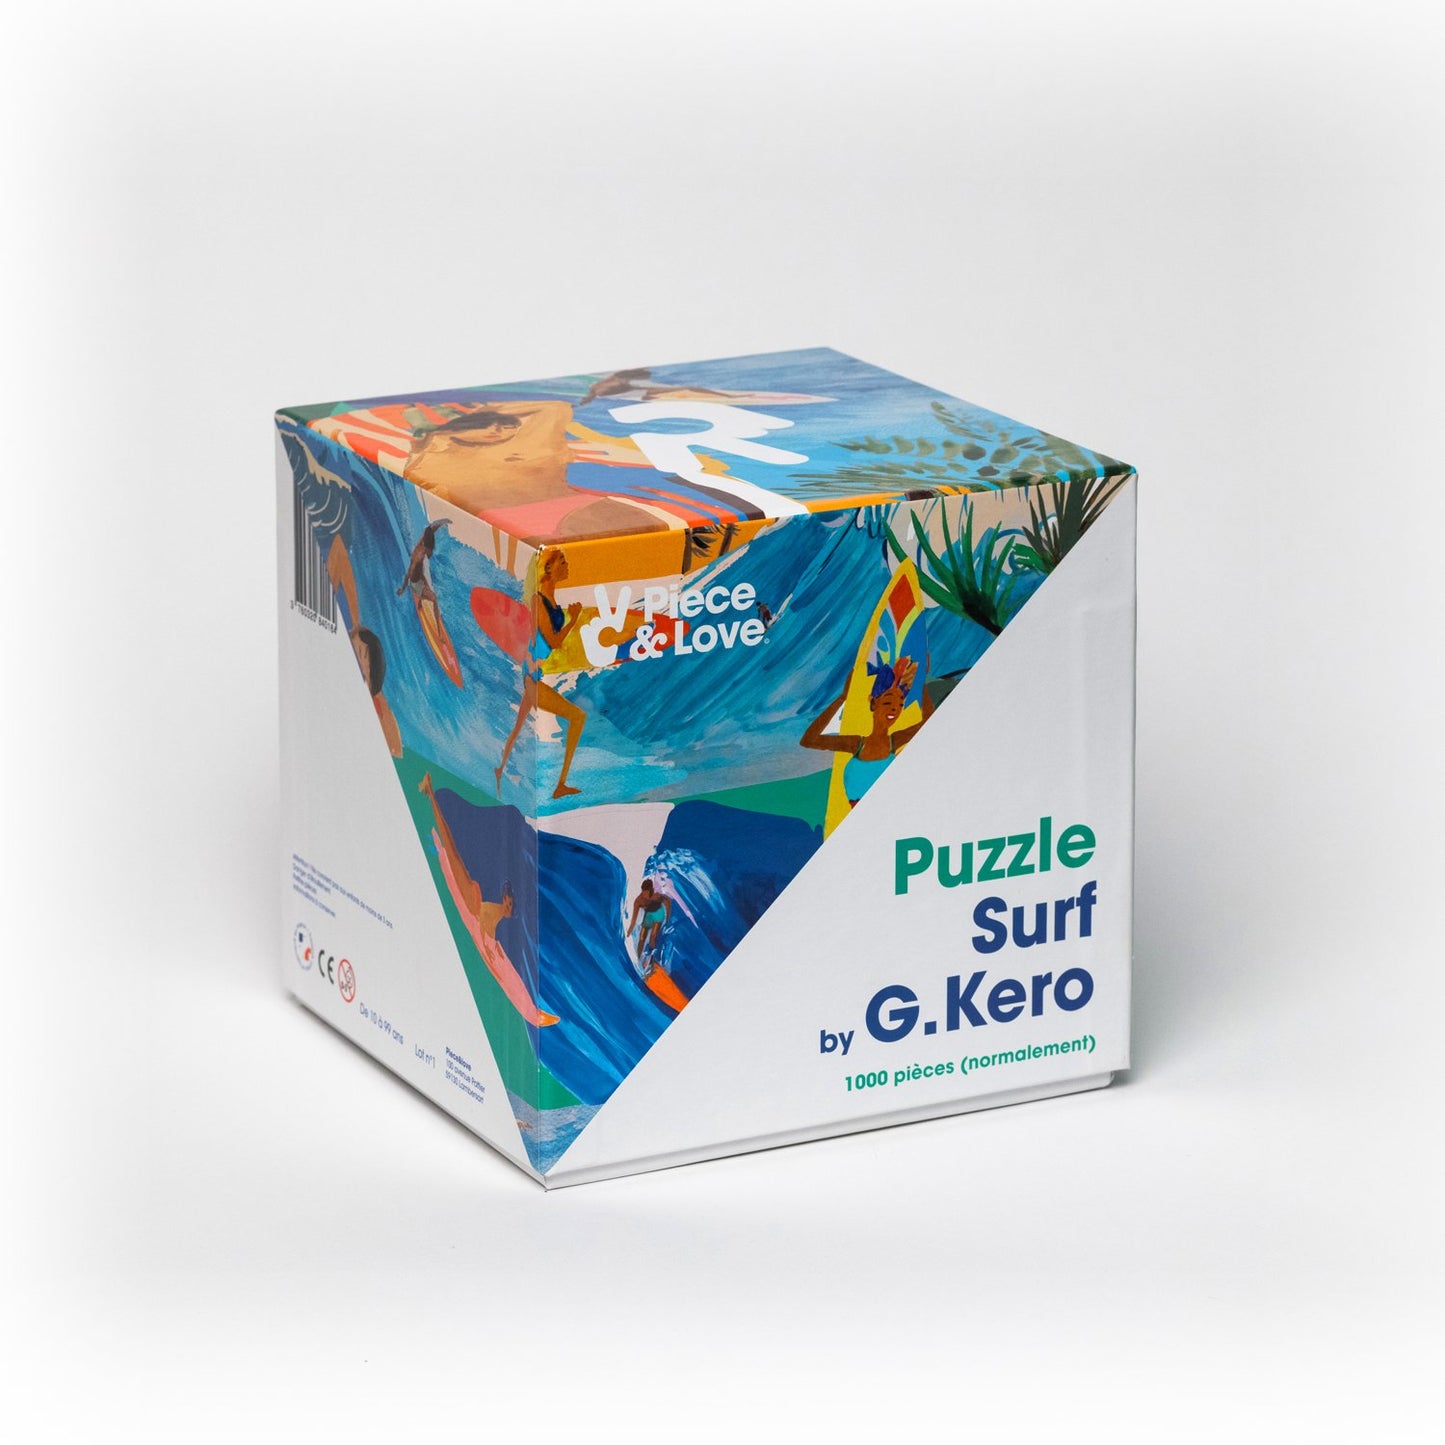 Puzzle 1000 pièces I Surf by G.Kero I Piece & Love